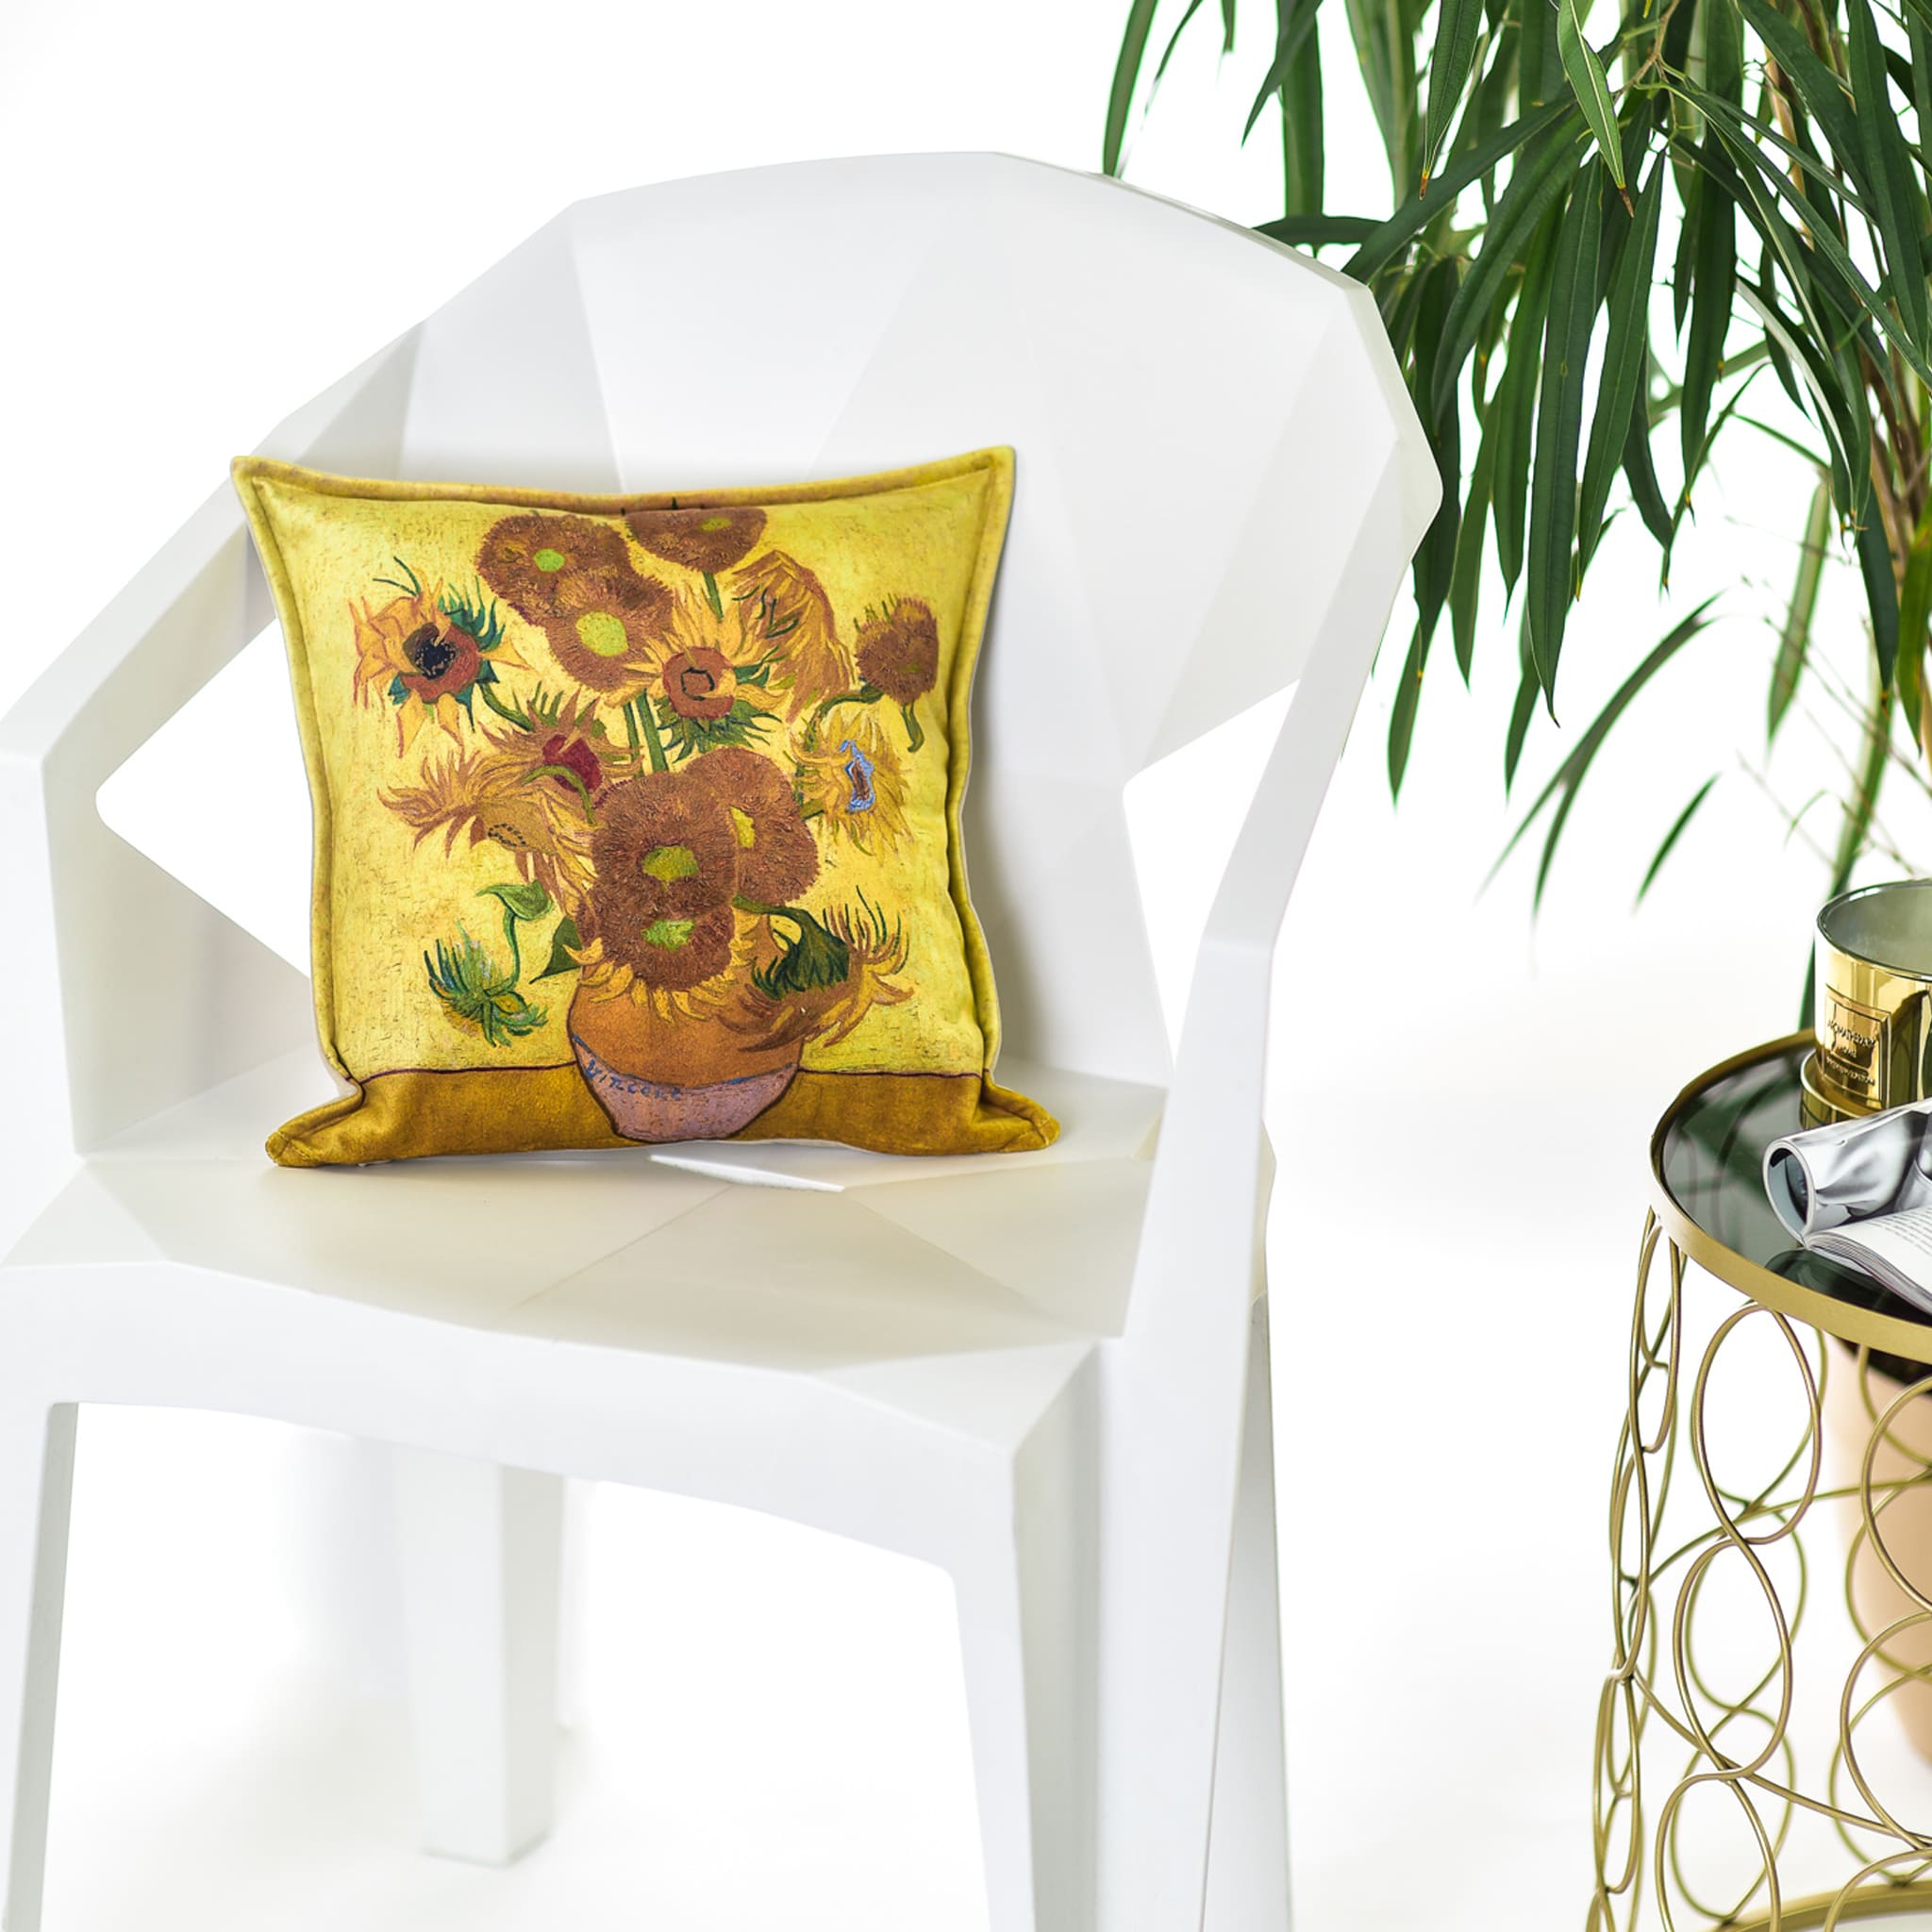 Decorative cushion Vincent van Gogh "Sunflowers"